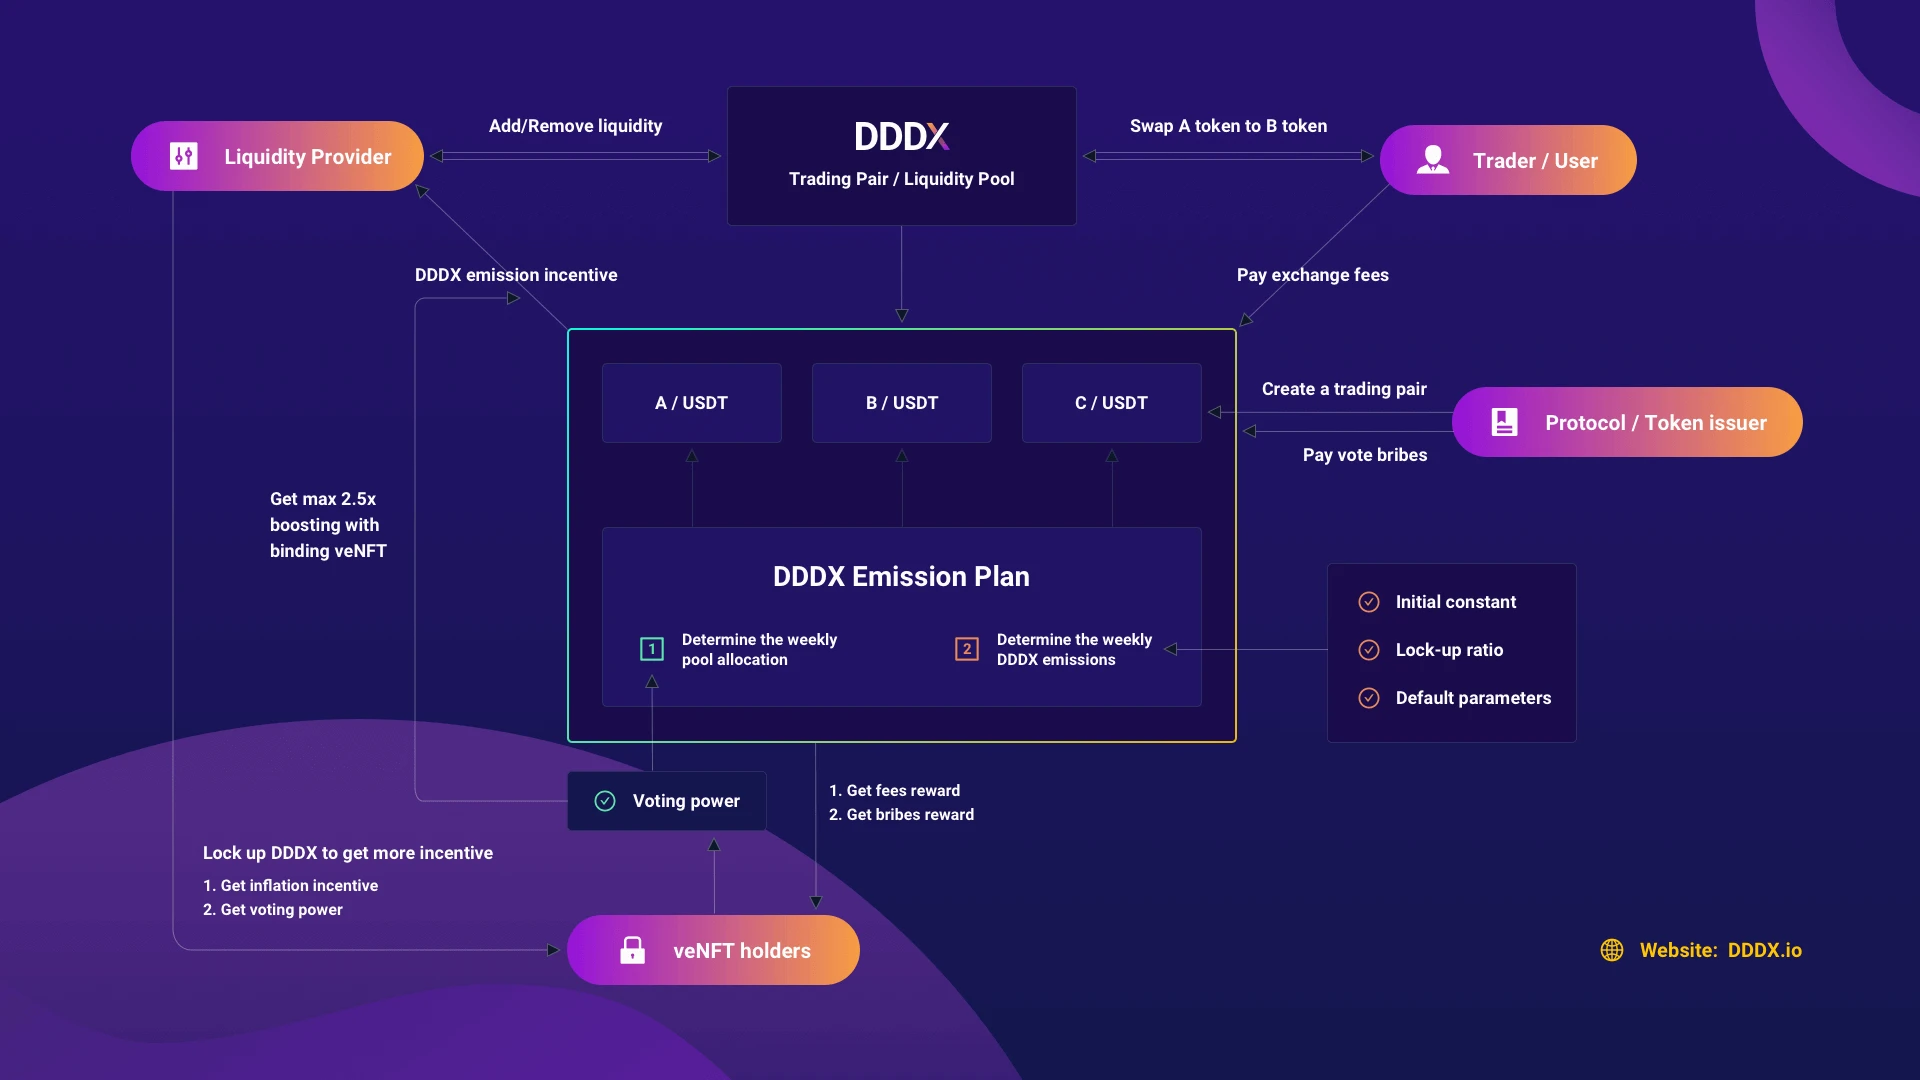 深度详解DEX 2.0协议DDDX的Vote to earn模式